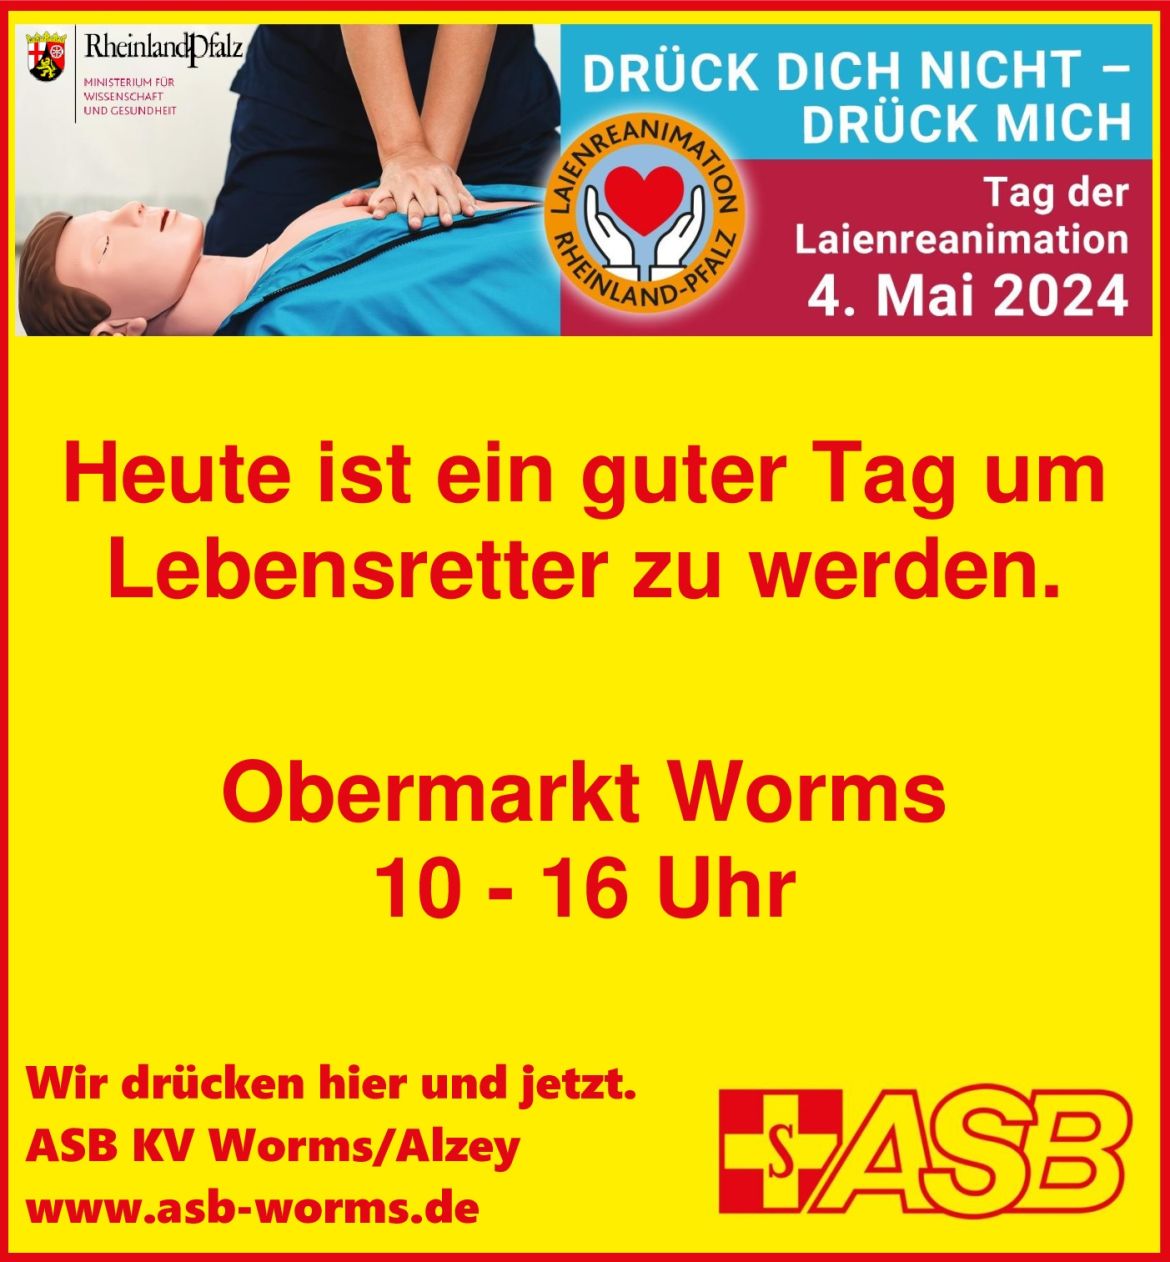 asb-worms-tag-der-laienreanimation-info.jpg